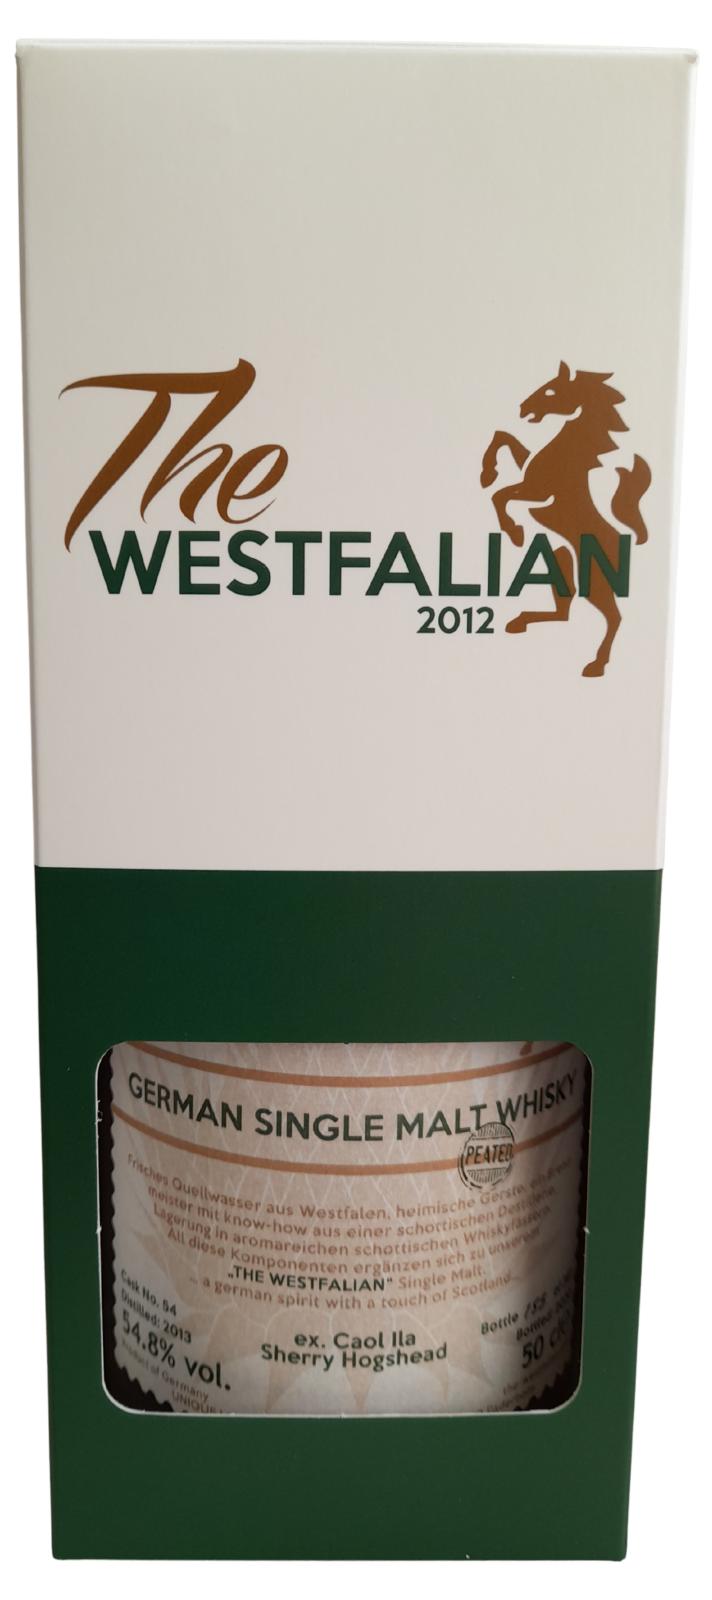 The Westfalian 2013